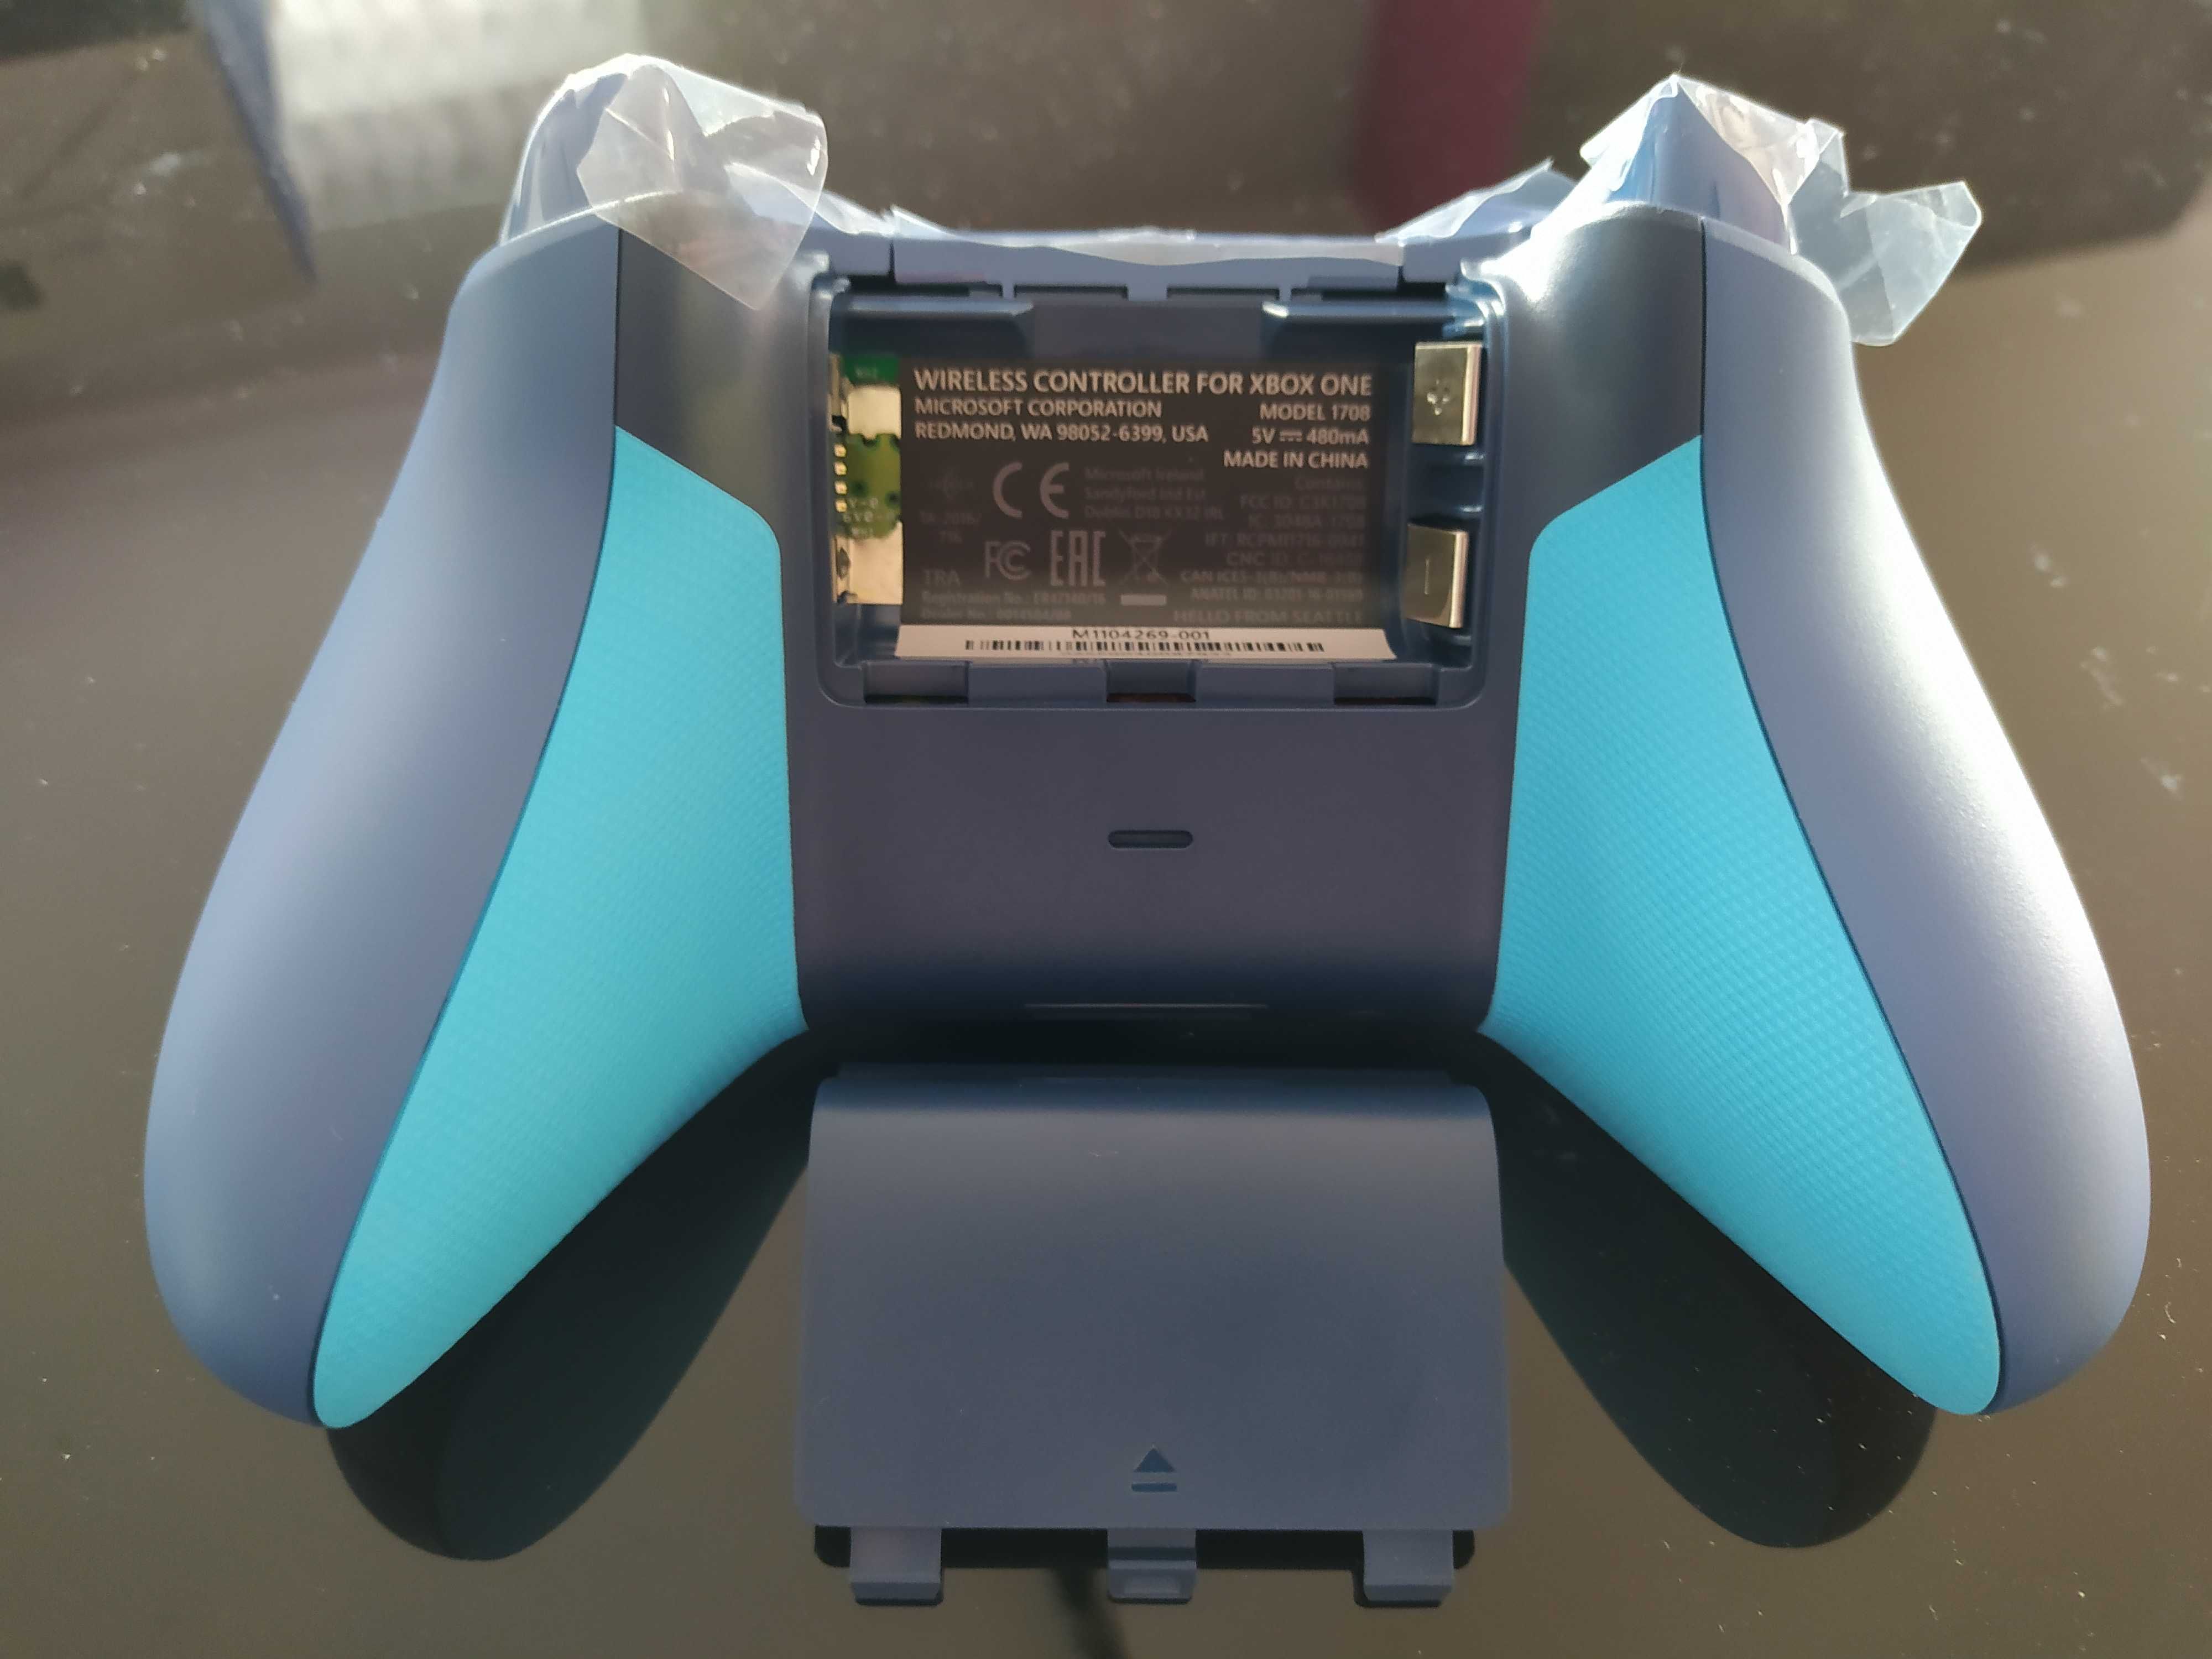 Pad kontroler od konsoli Xbox One Series S X lub PC Sport Blue